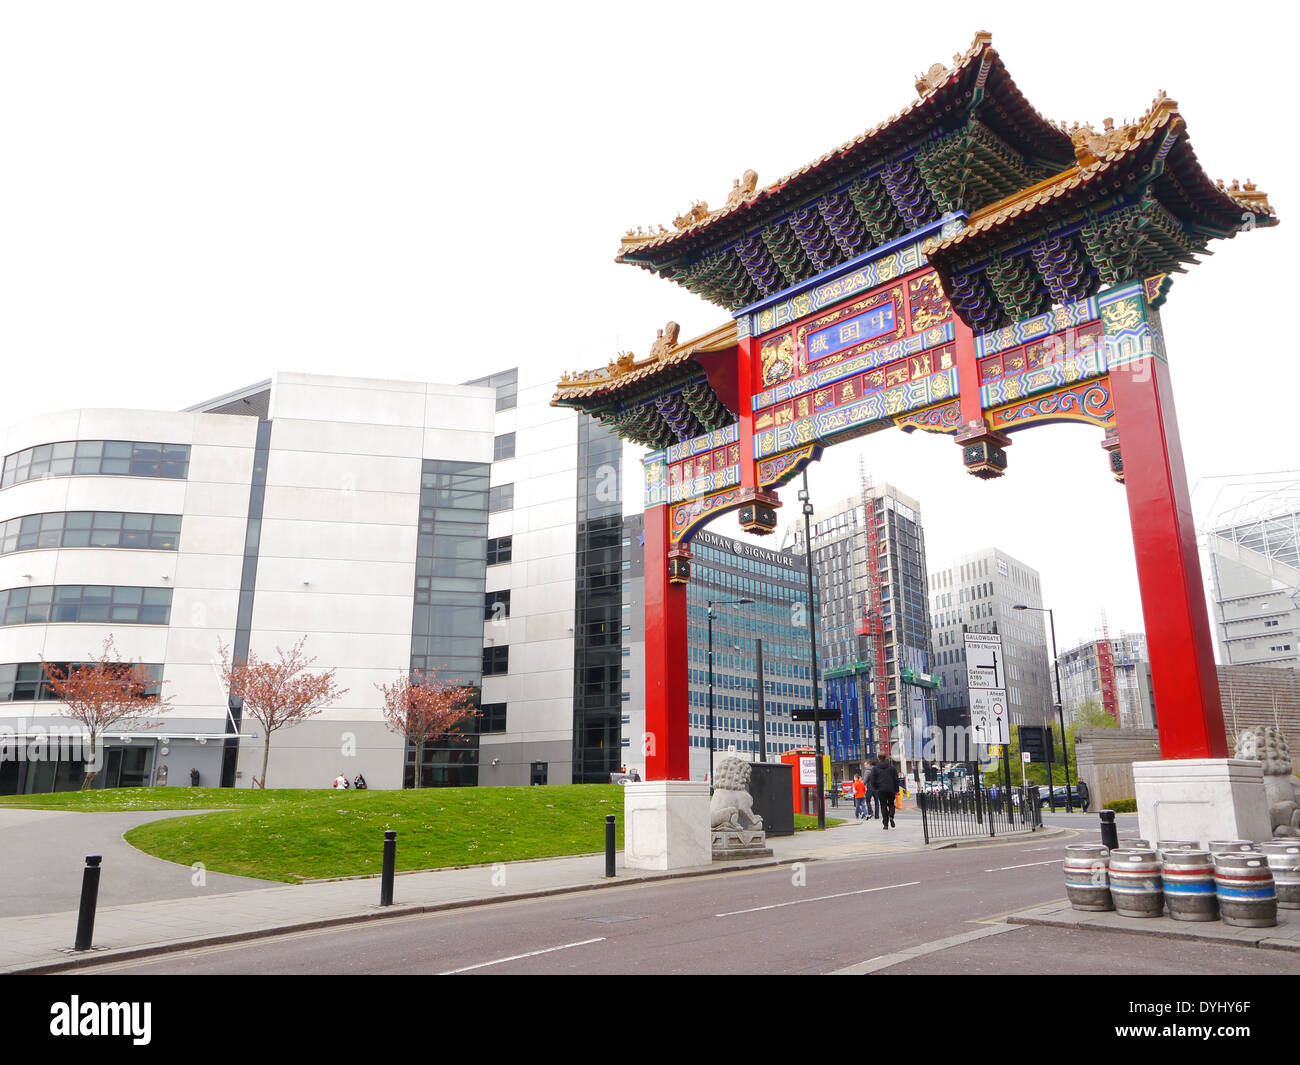 Chinesischer Bogen, Chinatown, Gallowgate / St. Andrew Street, Newcastle Upon Tyne, England, UK - Farbe Stockfoto